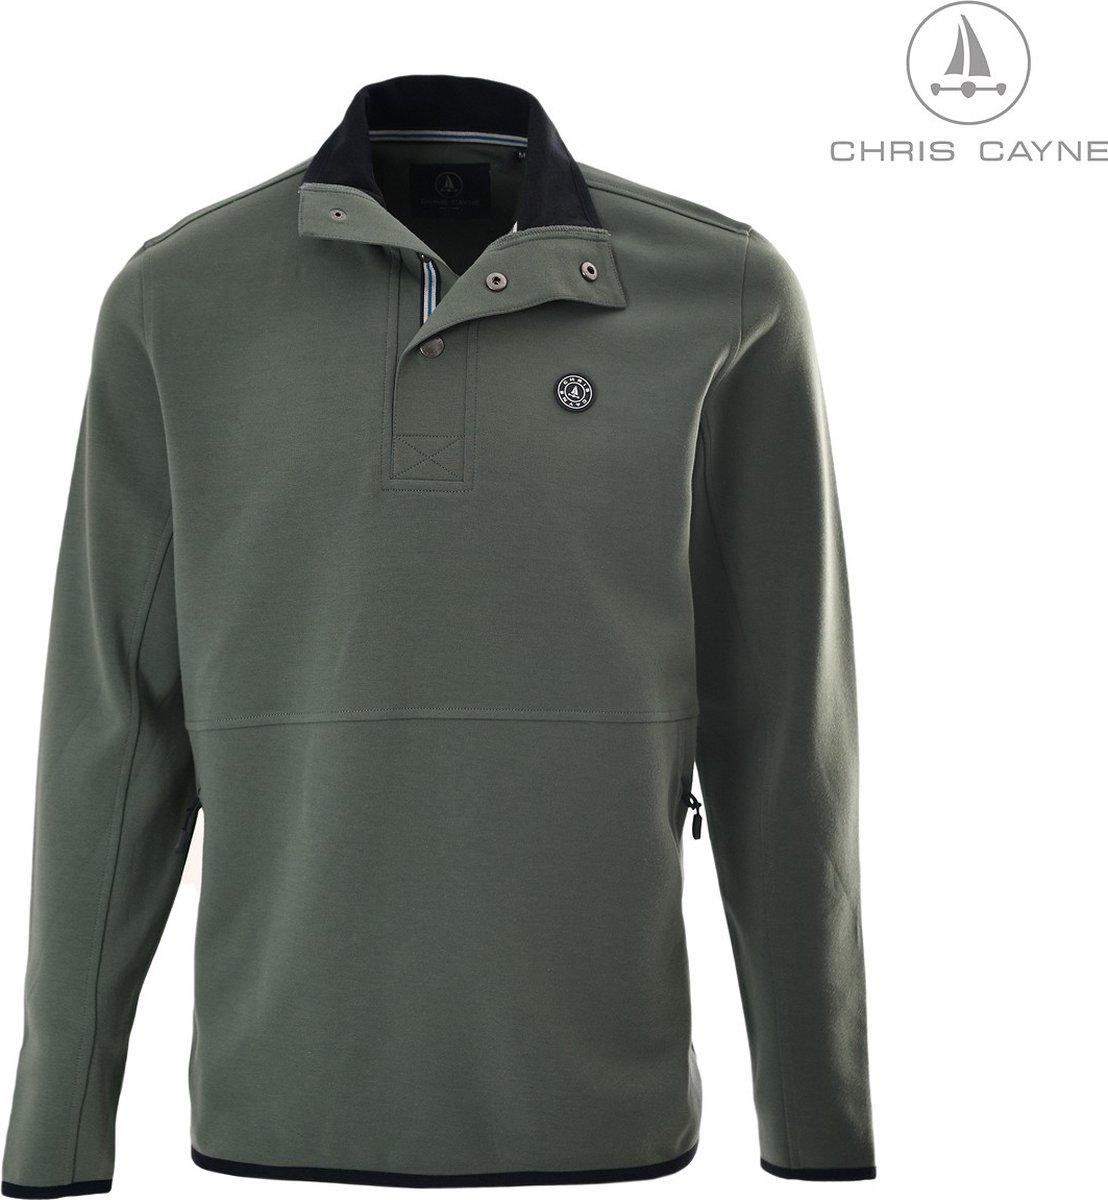 Chris Cayne heren trui - polosweater heren - 3489 - groen - navy accenten - maat 3XL